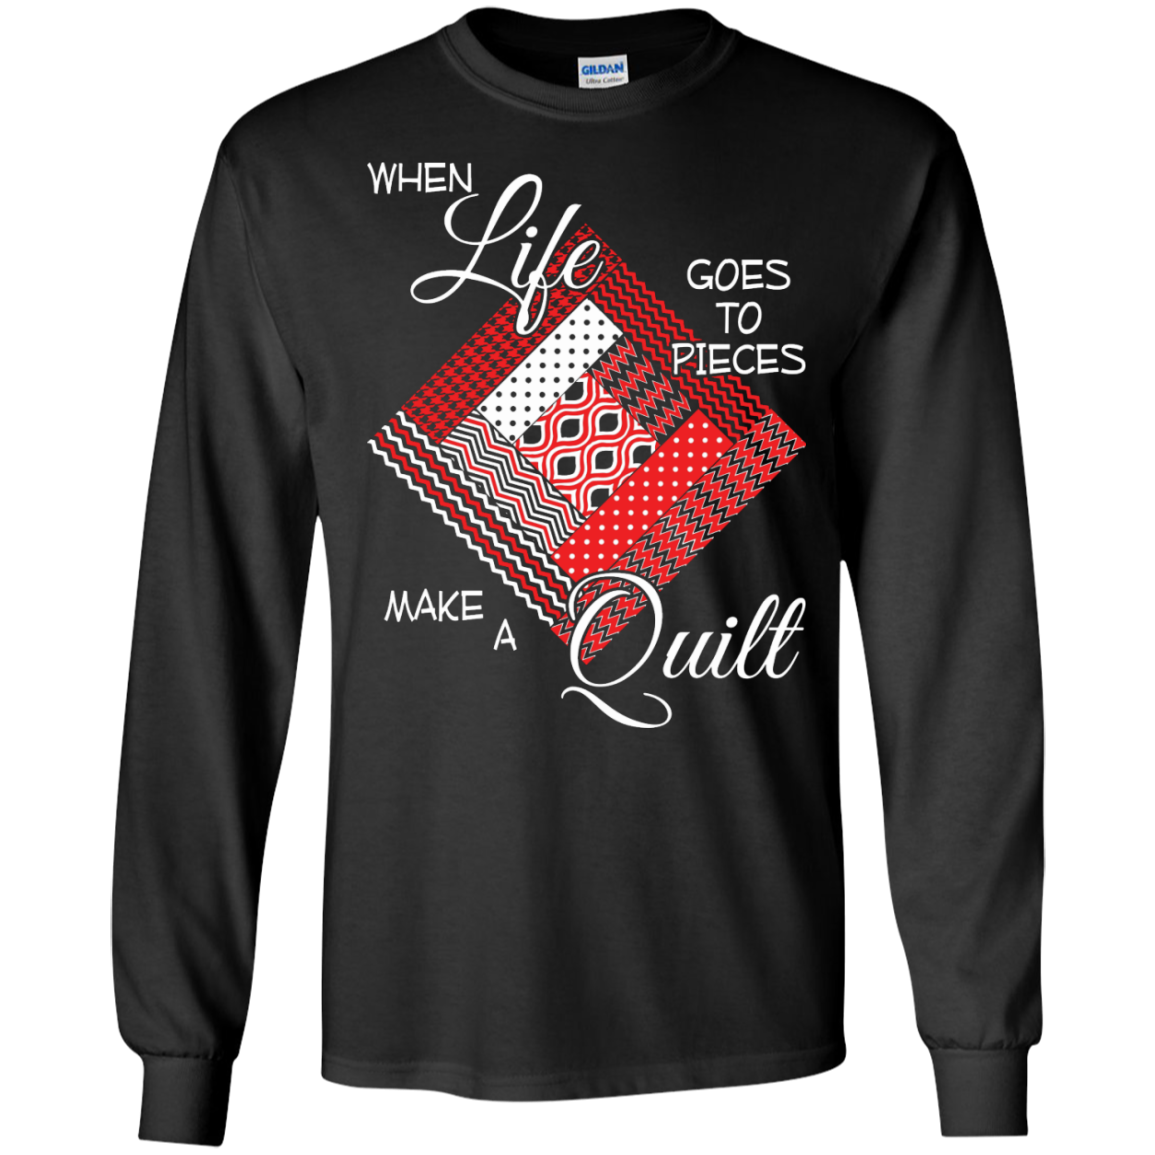 Make a Quilt (red) Long Sleeve Ultra Cotton T-Shirt - Crafter4Life - 2